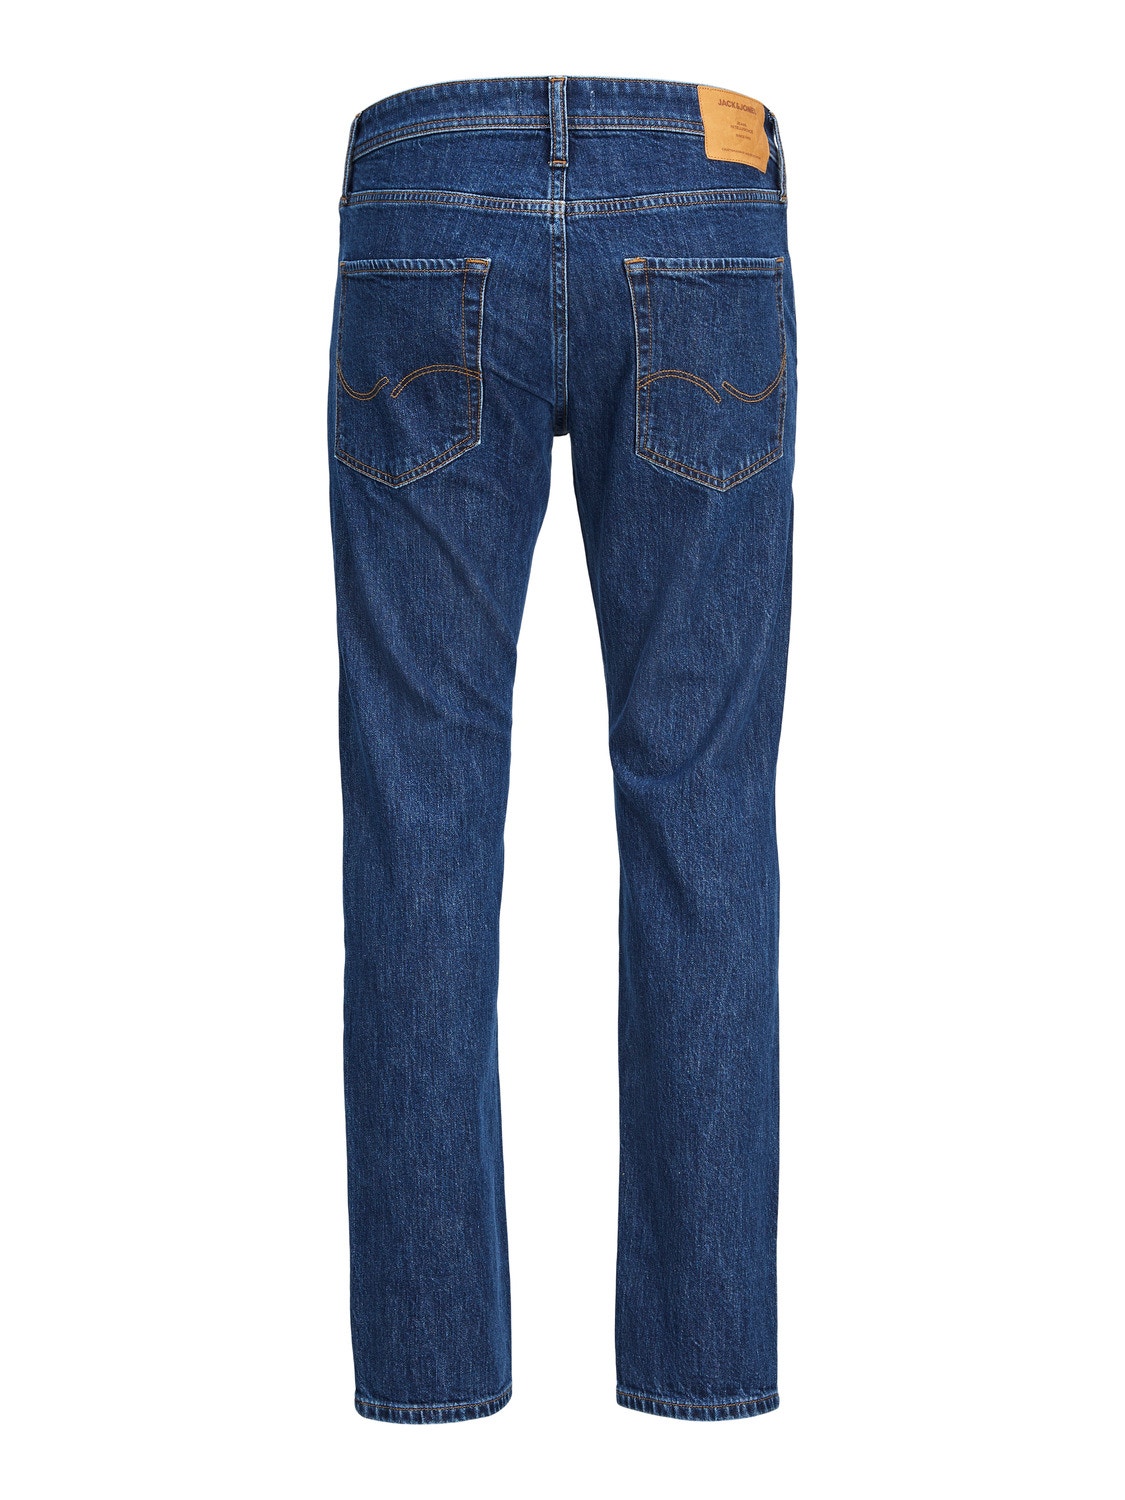 JJIMIKE JJORIGINAL MF 486 NOOS Tapered fit jeans with 20% discount ...